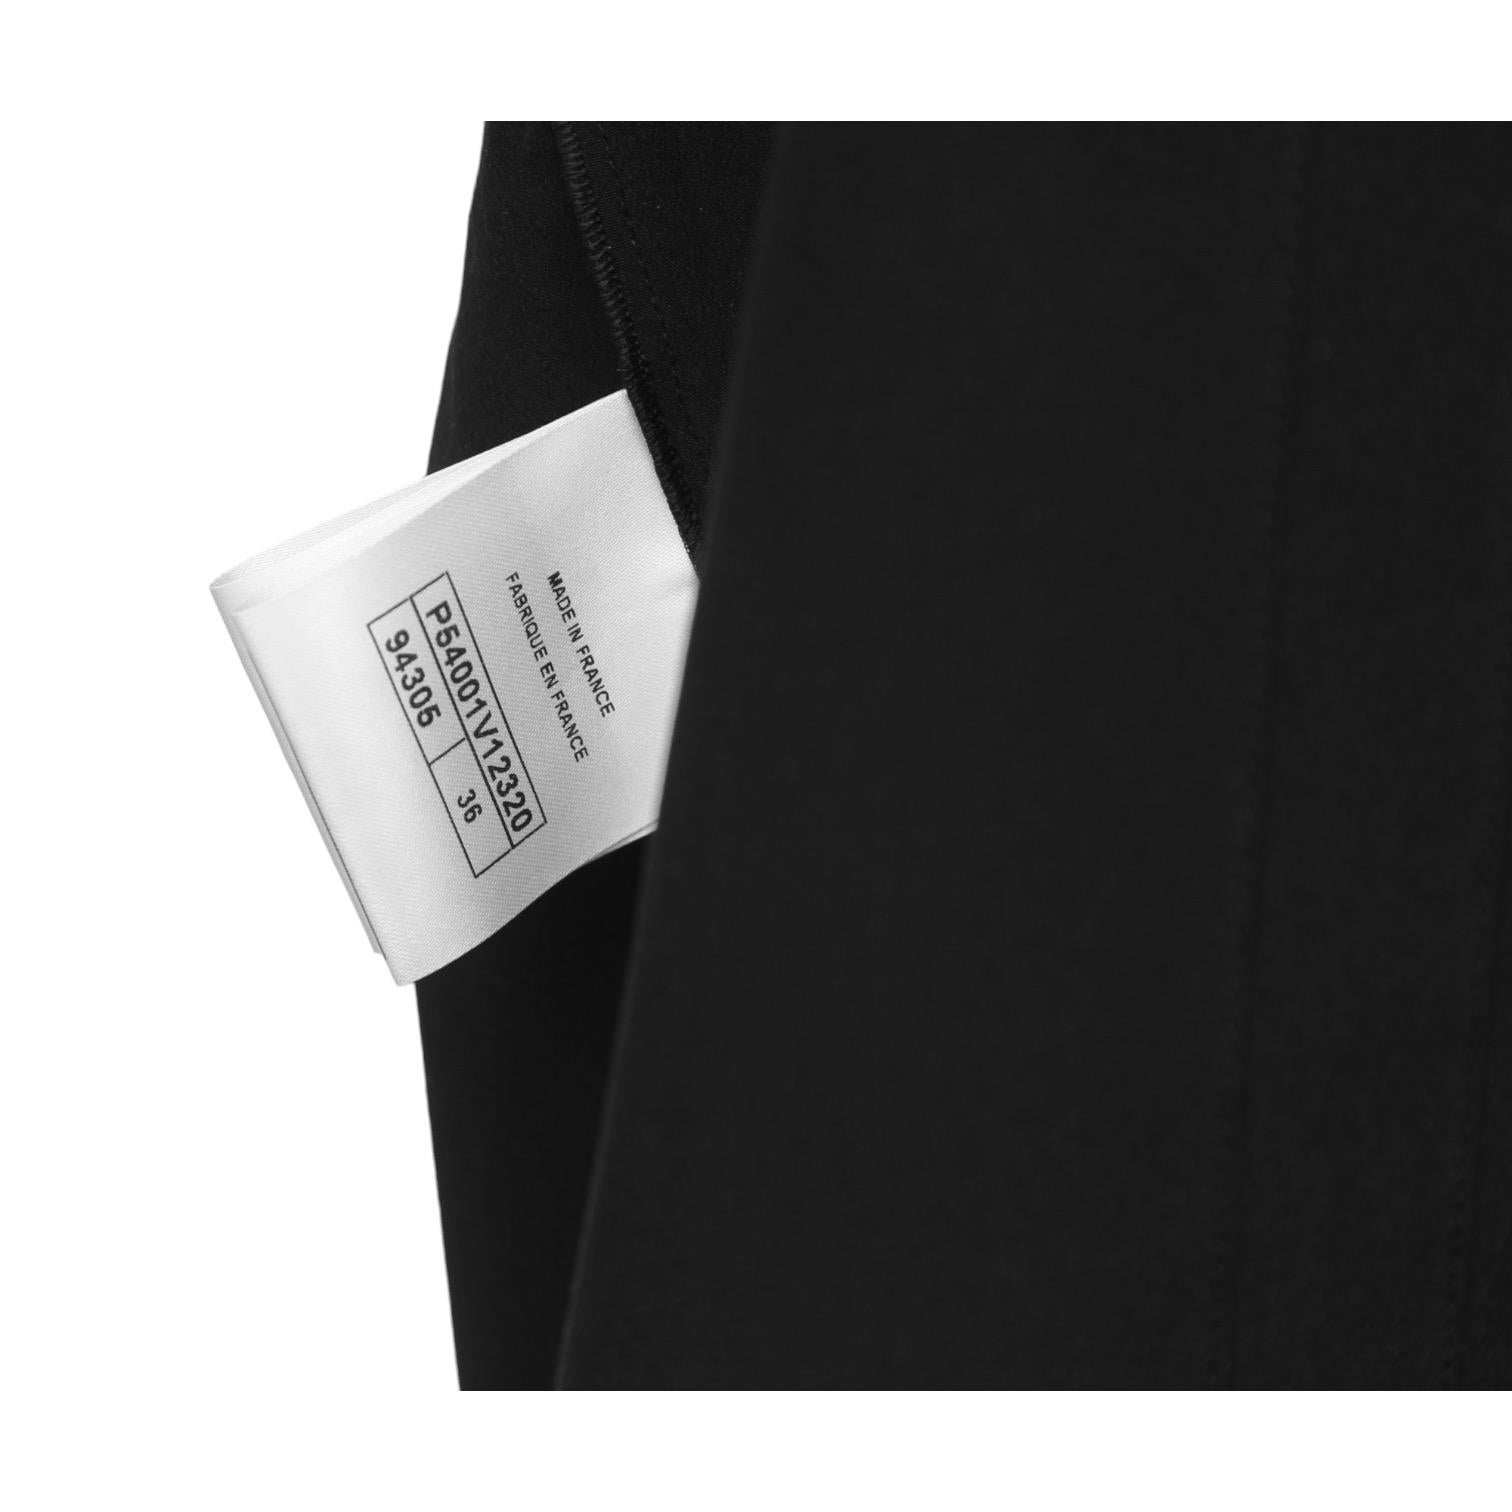 CHANEL Black Silk Blouse Sleeveless Top Shirt Pleats V-Neck Buttons Sz 36 For Sale 4